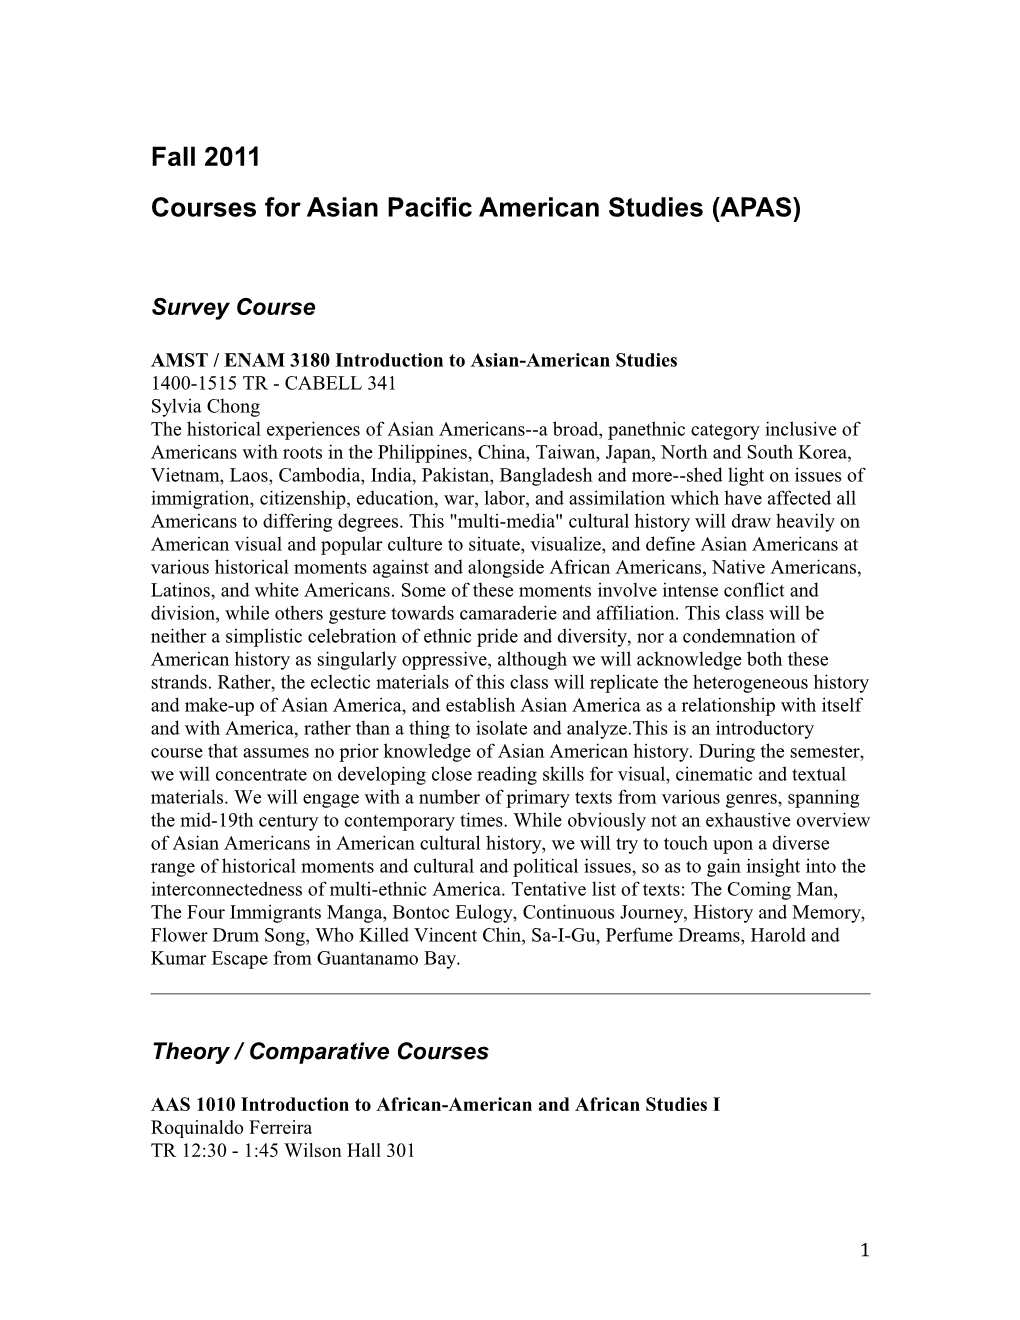 Courses for Asian Pacific American Studies (APAS)